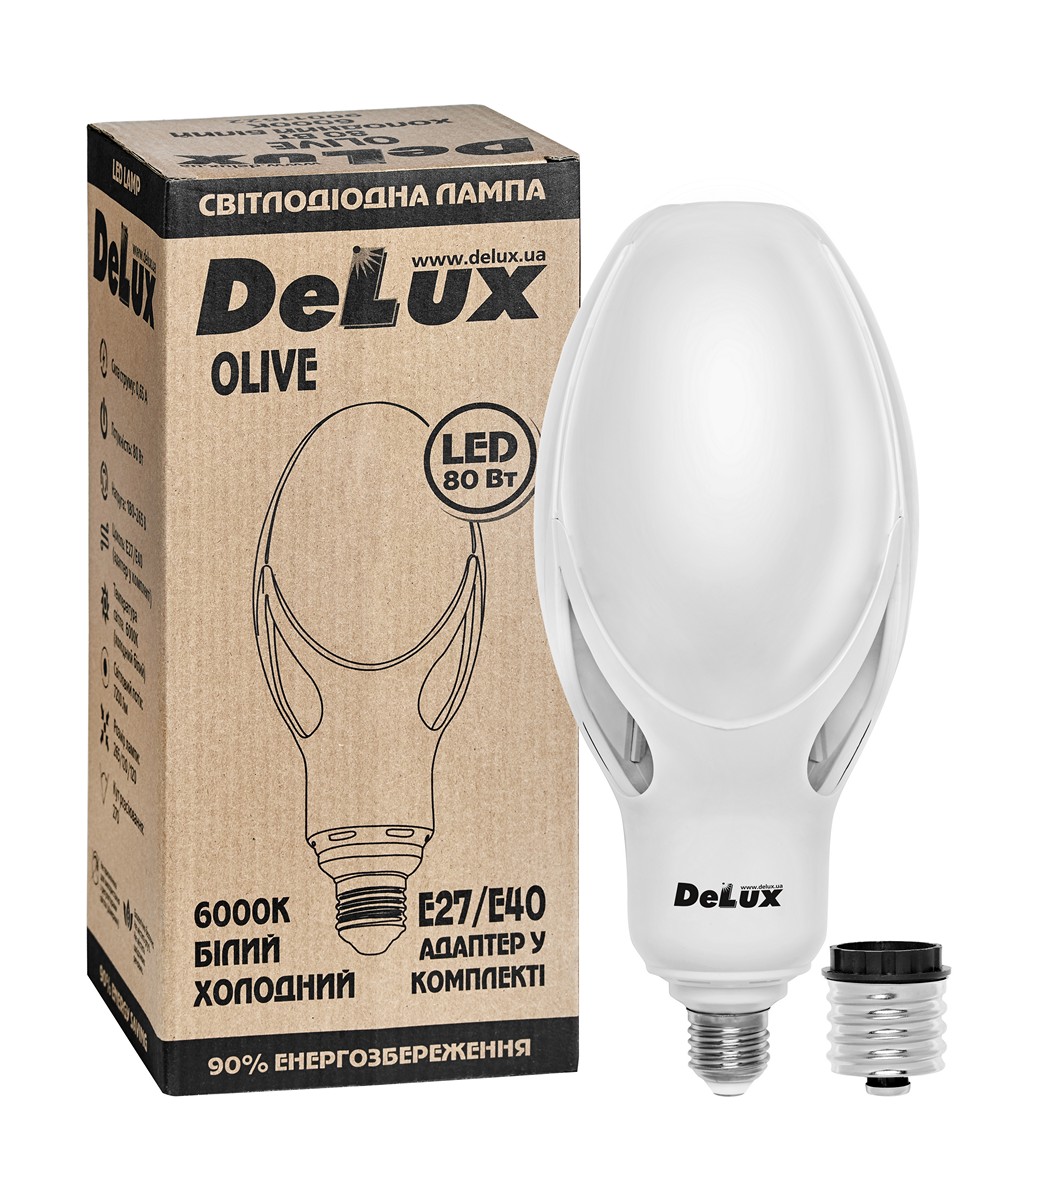 Лампа светодиодная с адаптером Delux Olive E27/Е40 80W 6000K 7200lm 270° 220V